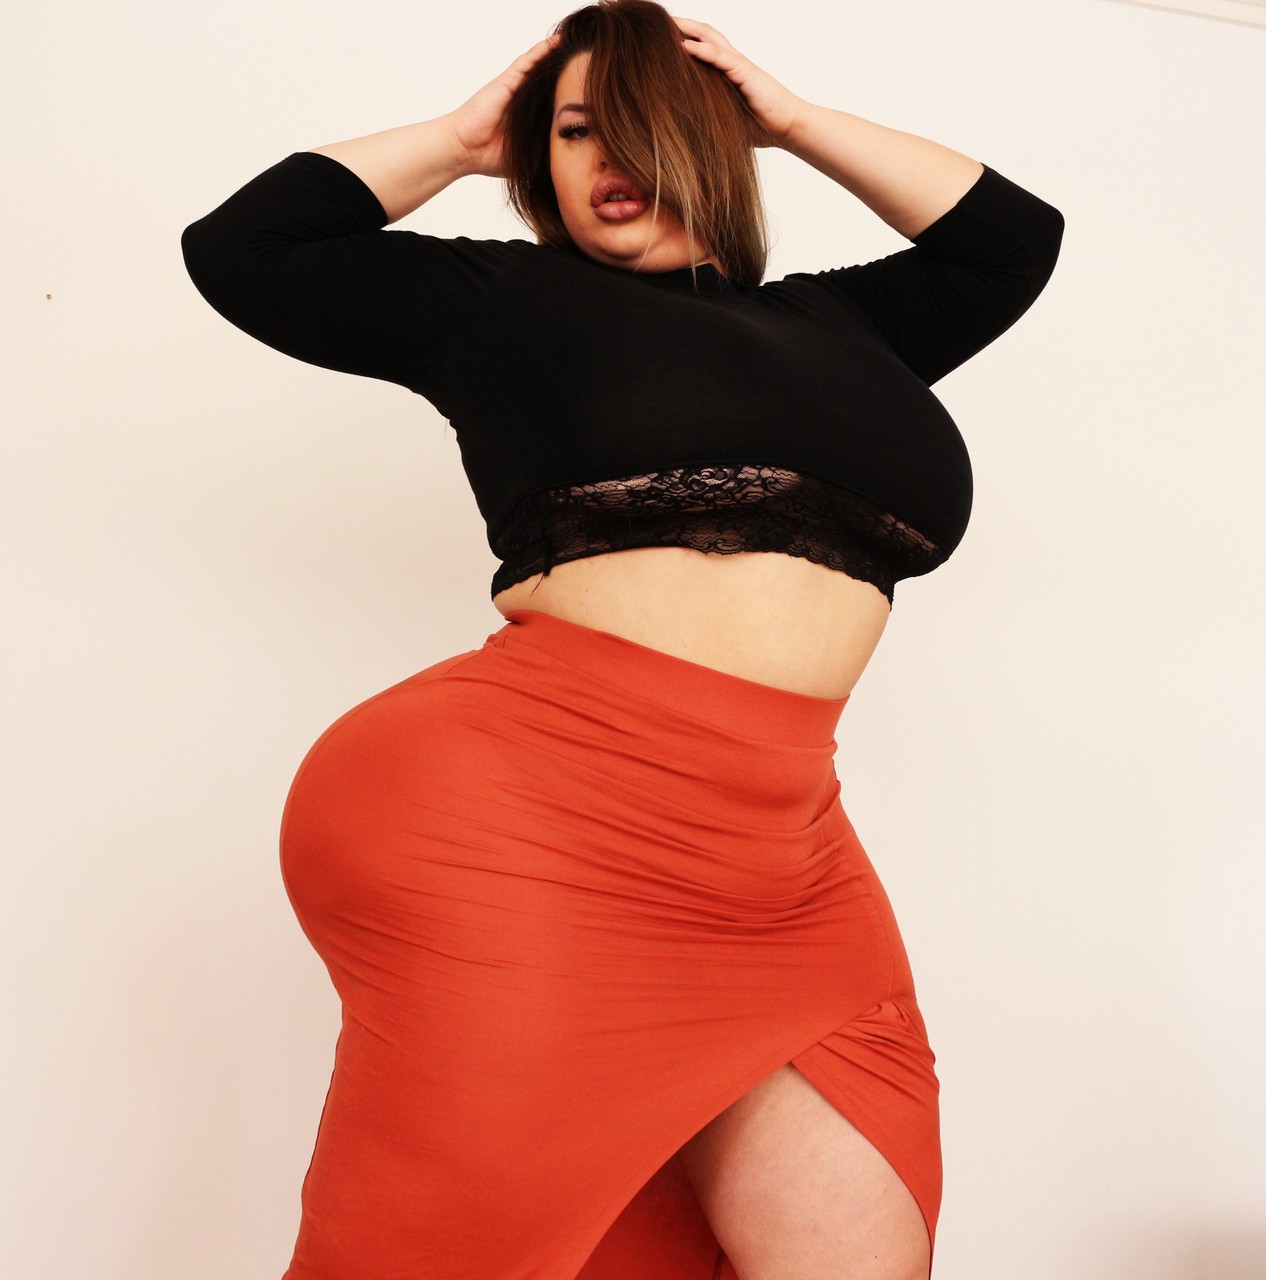 Stunning MILF fatty Natasha Crown flaunting her very big ass in a tight skirt photo porno #423816664 | Natasha Crown Pics, Natasha Crown, BBW, porno mobile